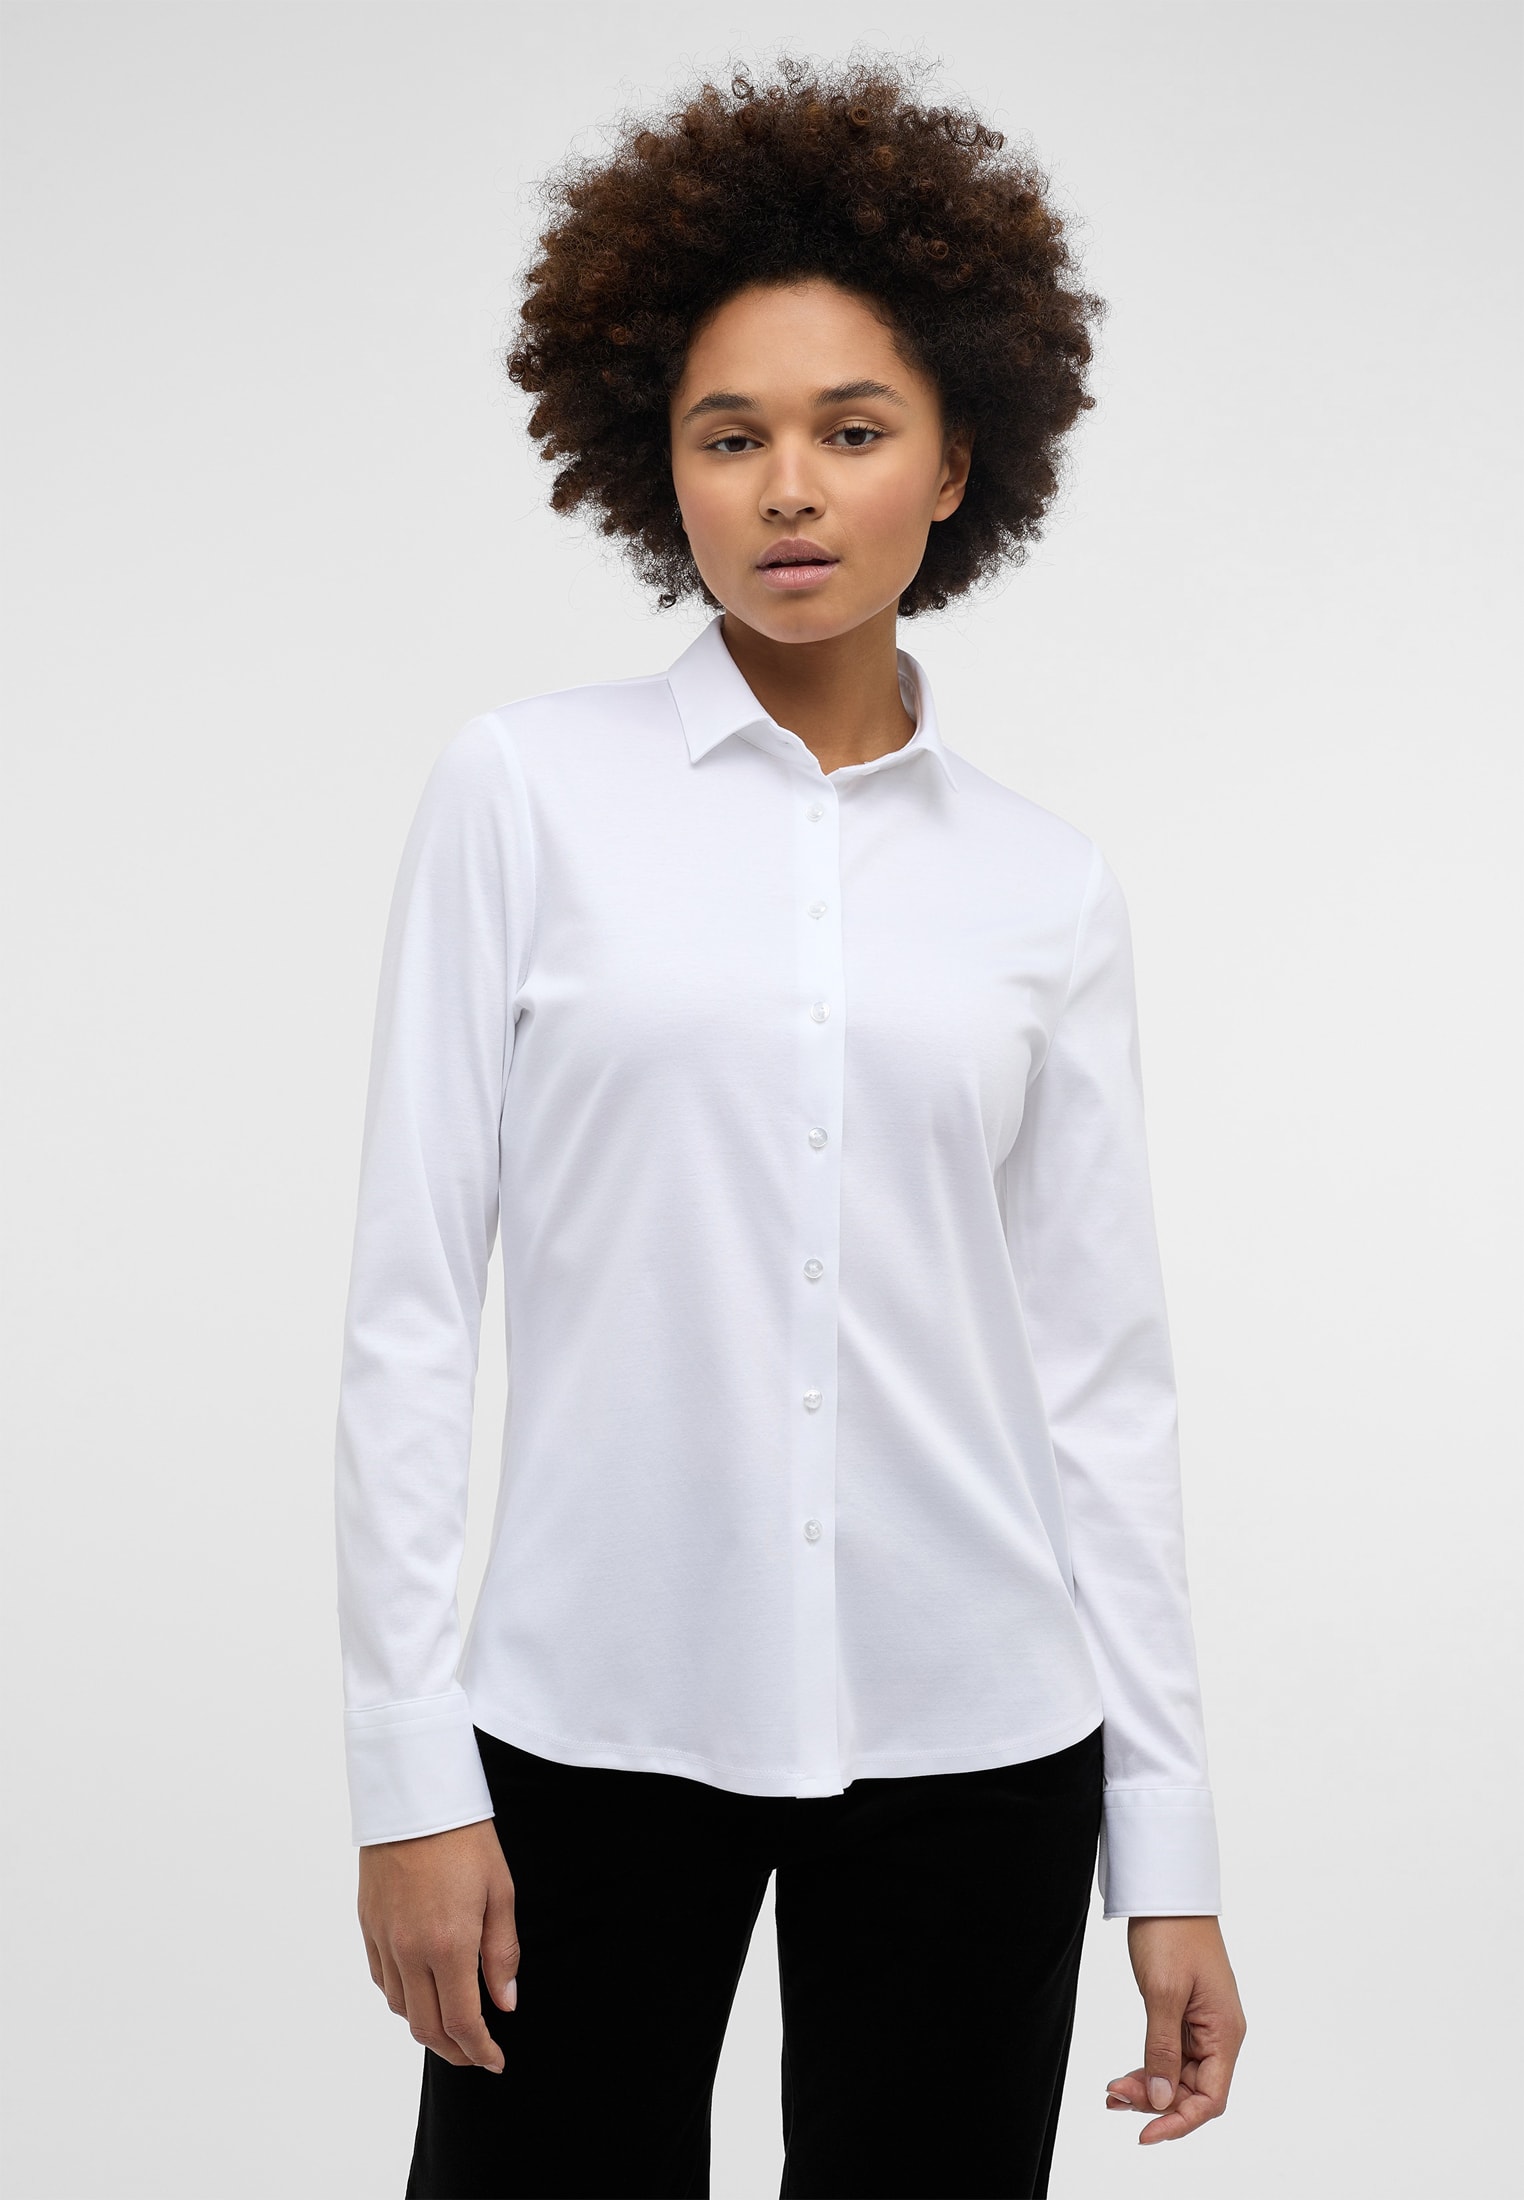 Jersey Shirt Blouse in white plain | white | long sleeve | 42 |  2BL00229-00-01-42-1/1